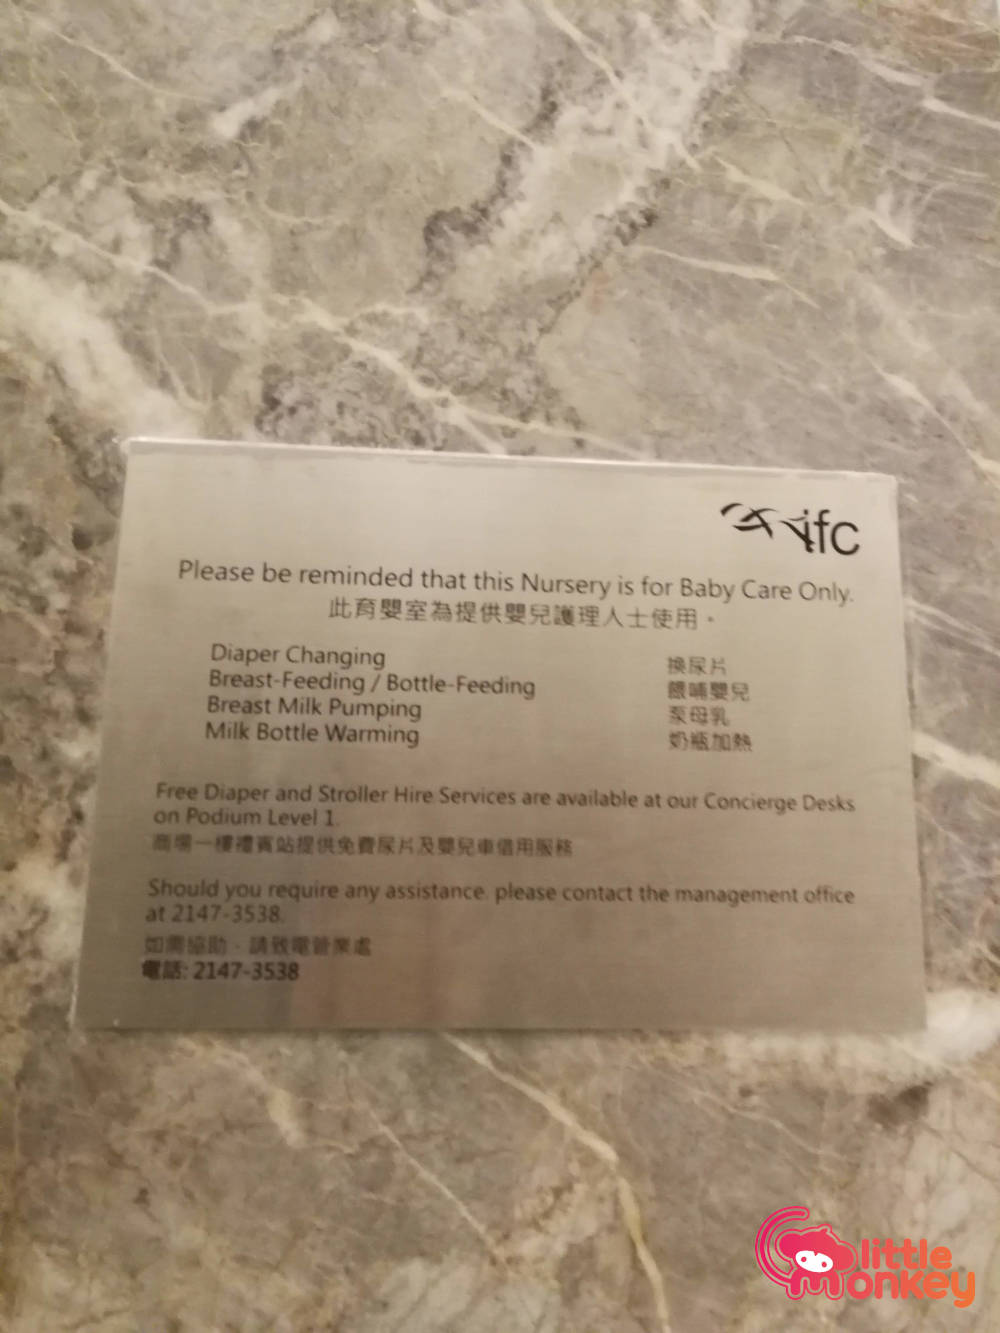 Service information of IFC Mall's nursery room